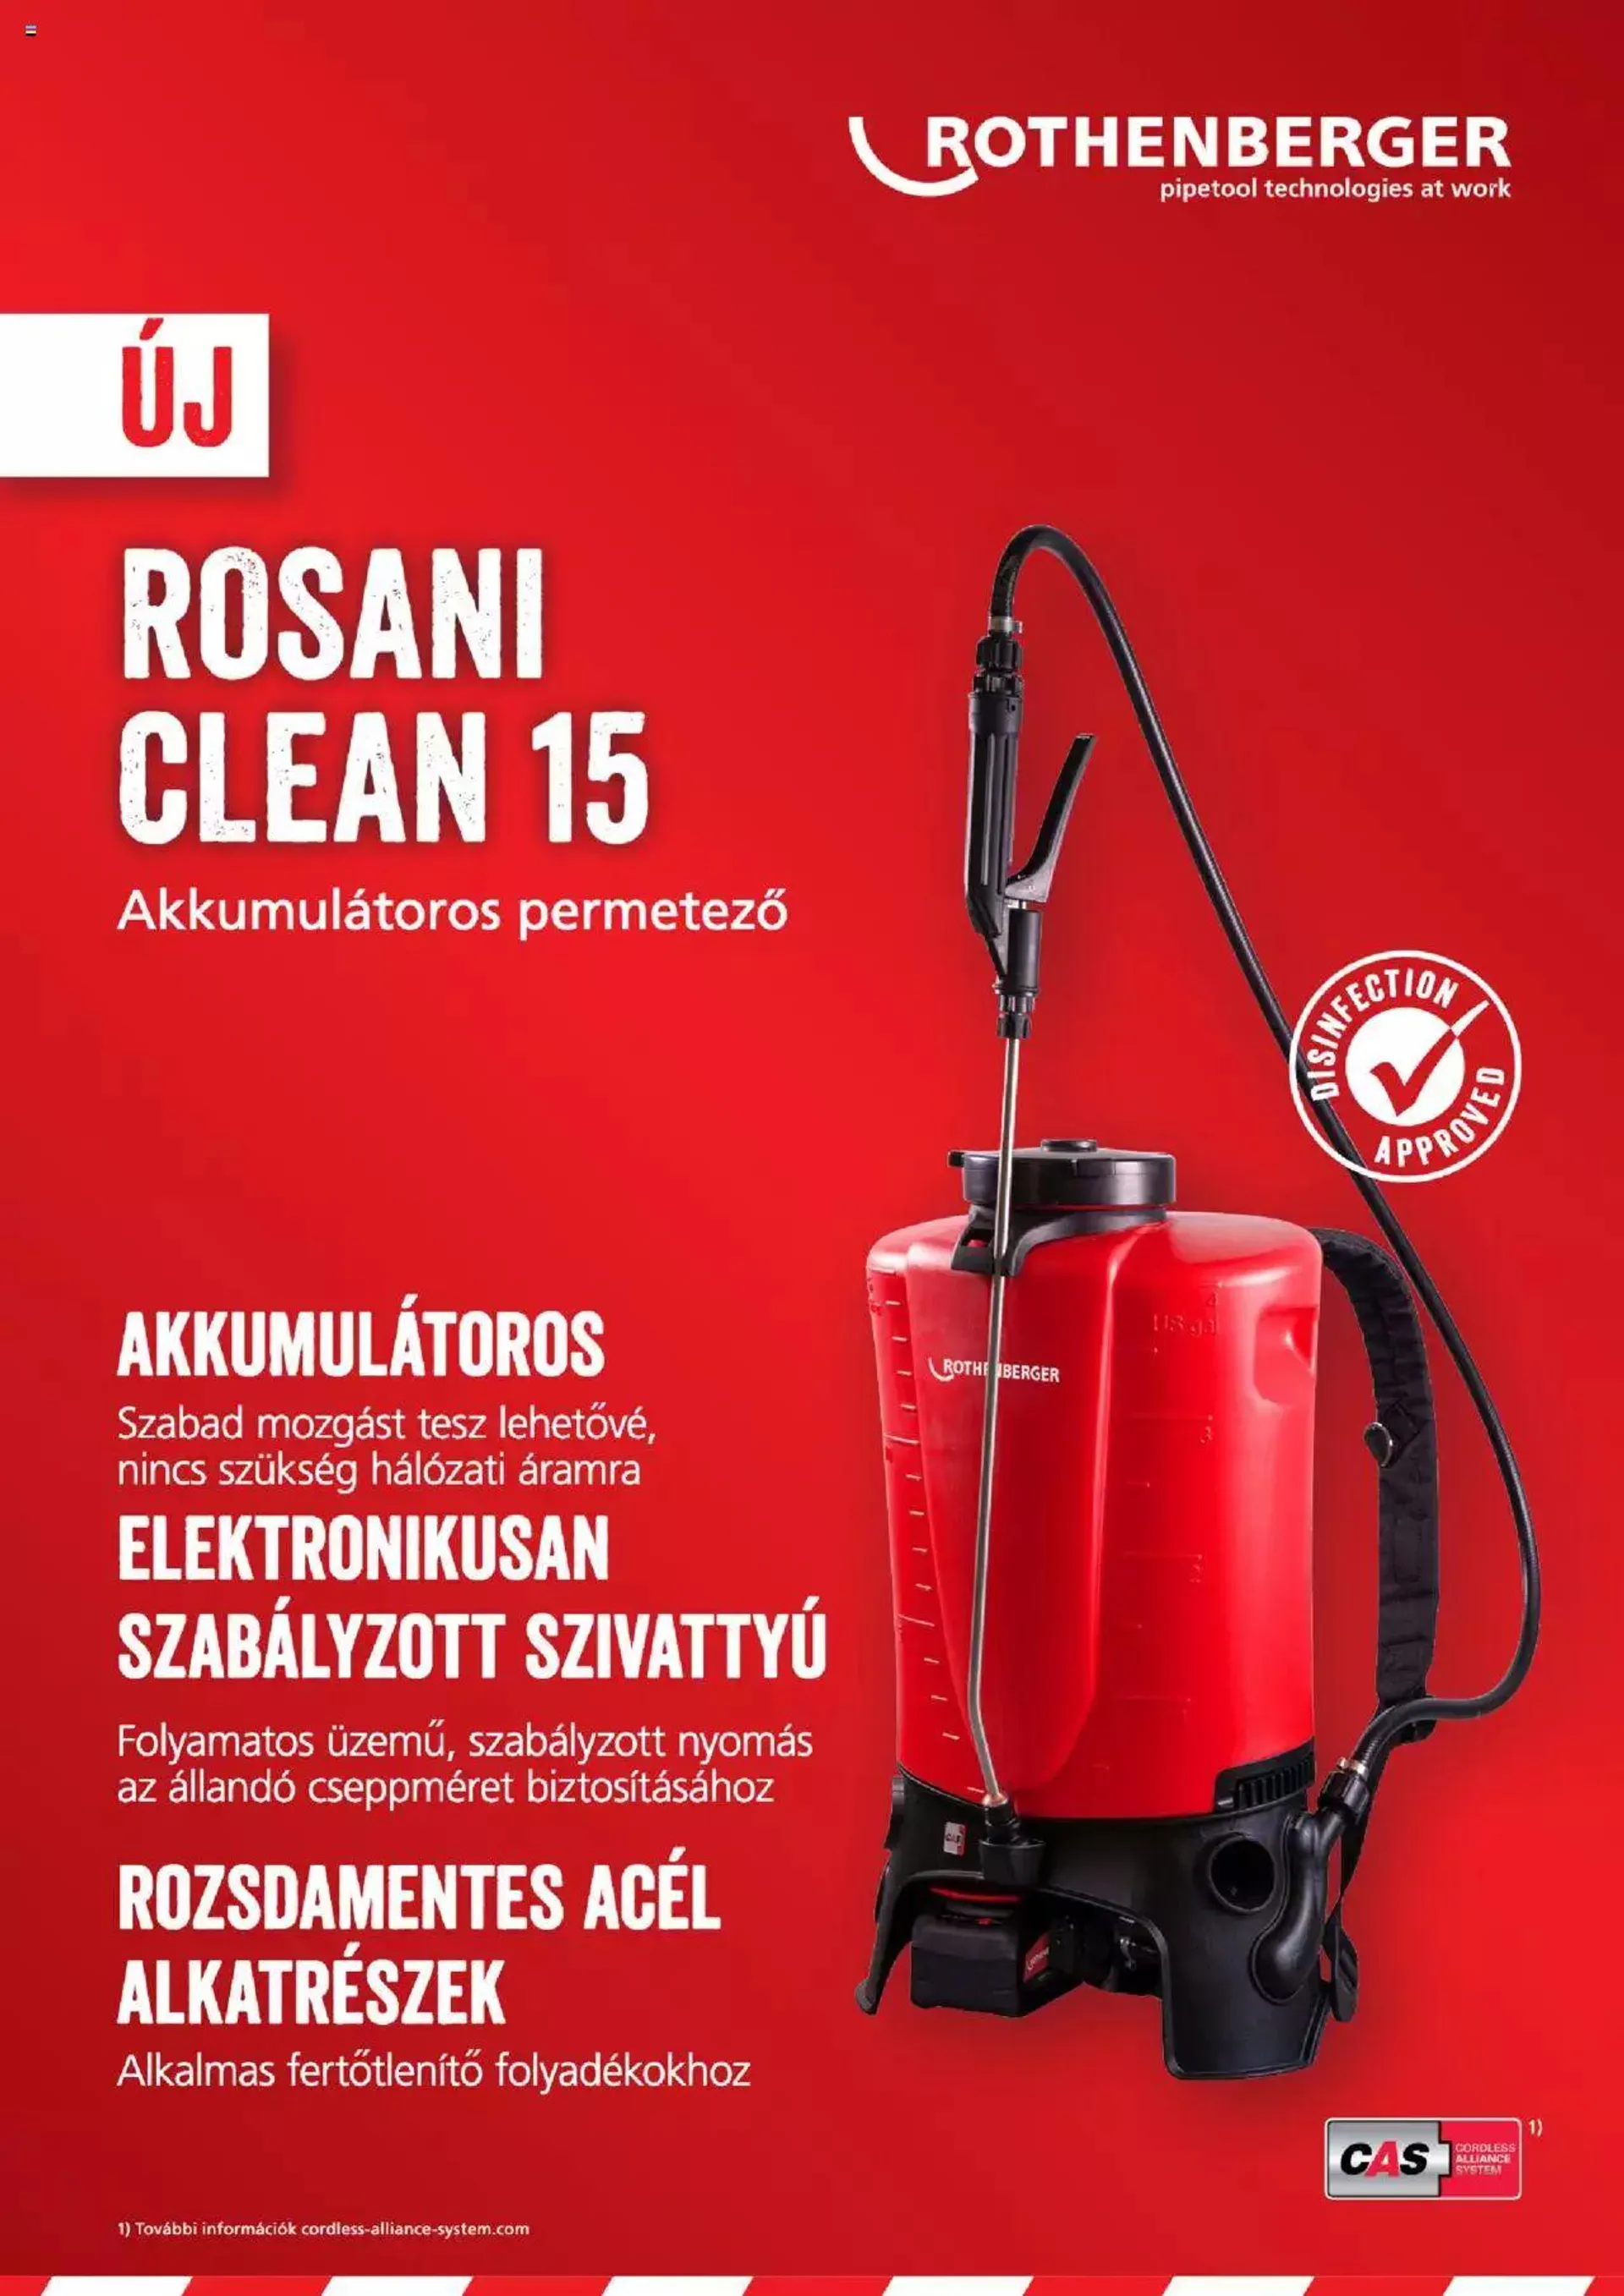 Rothenberger - Rosani Clean 15 - 0